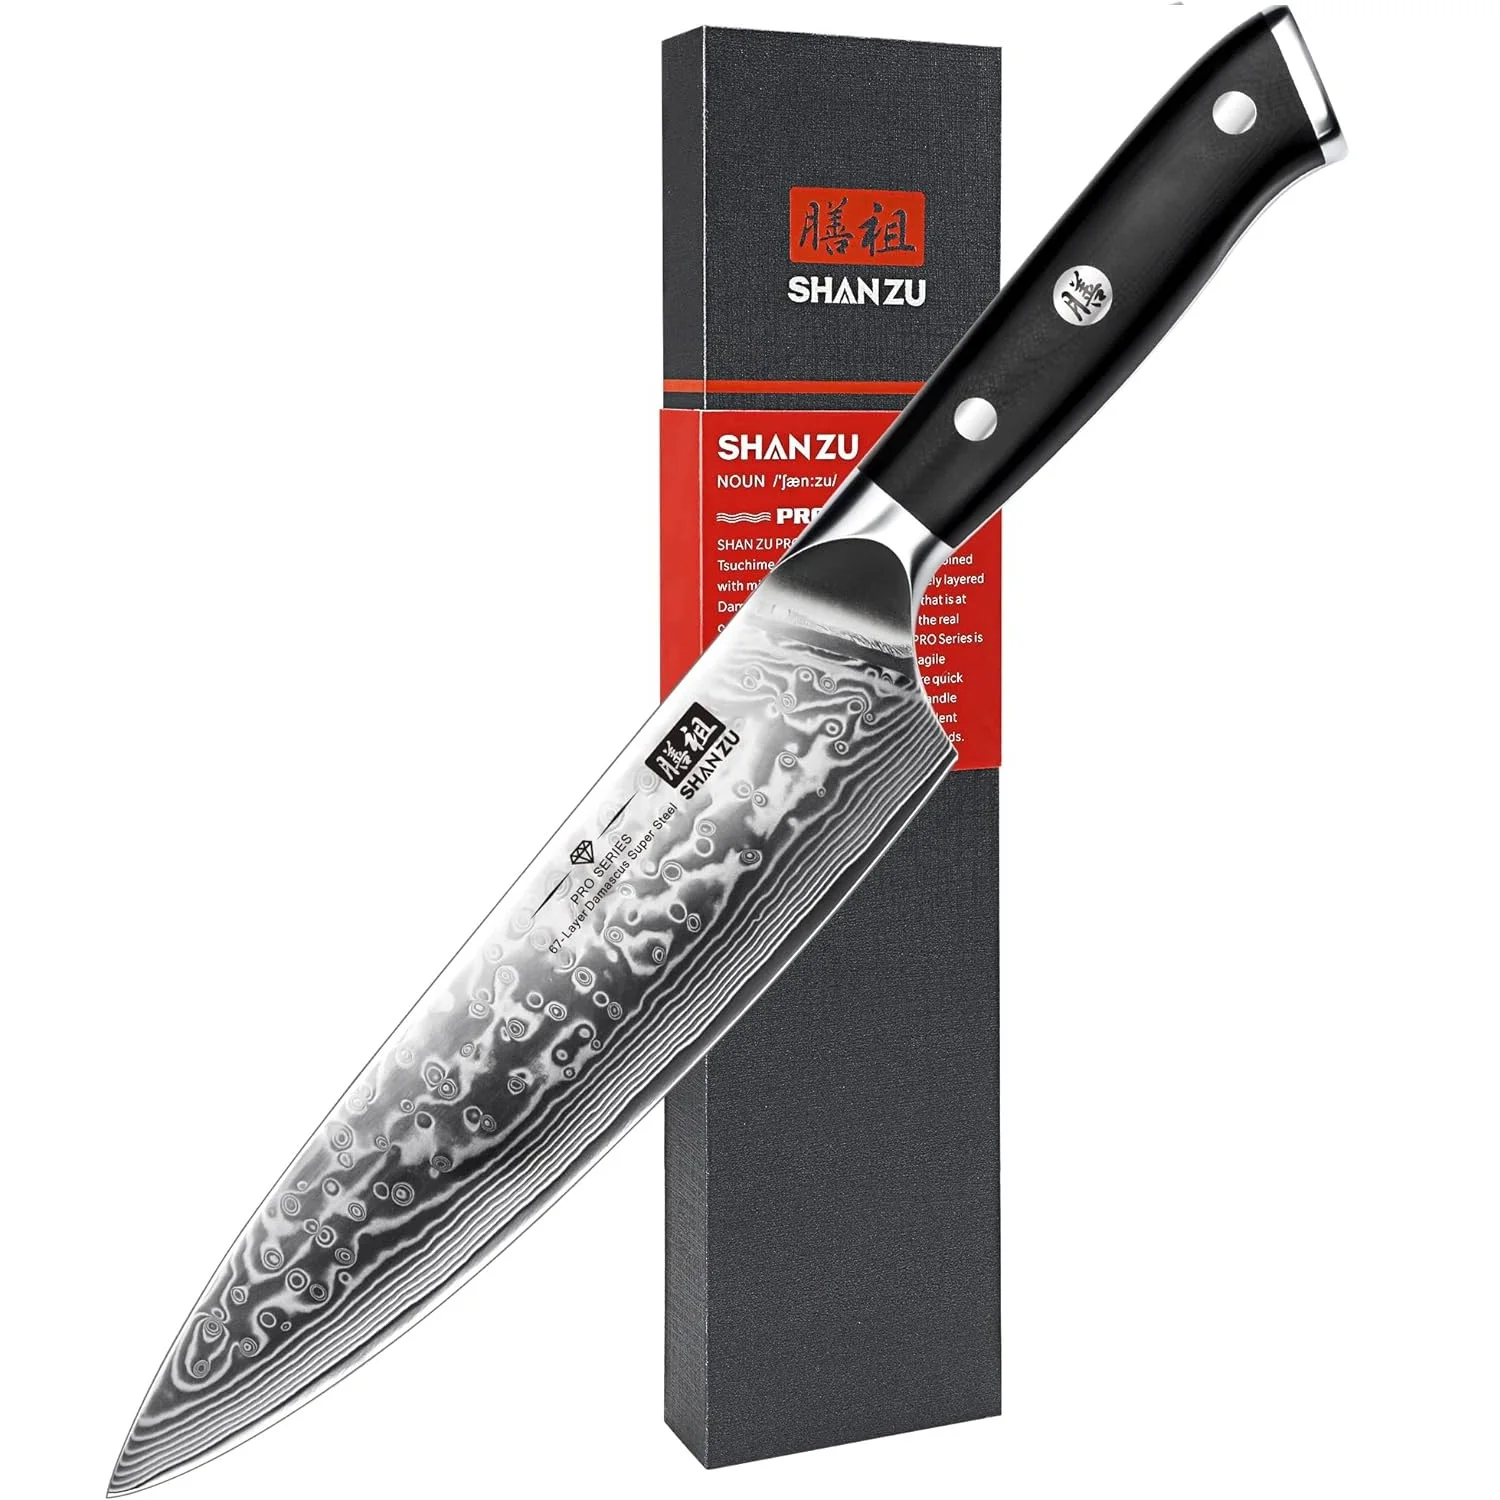 

SHAN ZU Damascus Steel Japanese Chef's Knife, AUS-10, Professional Kitchen Cooking Knife,Ergonomic Handle, Gift Box, 8"